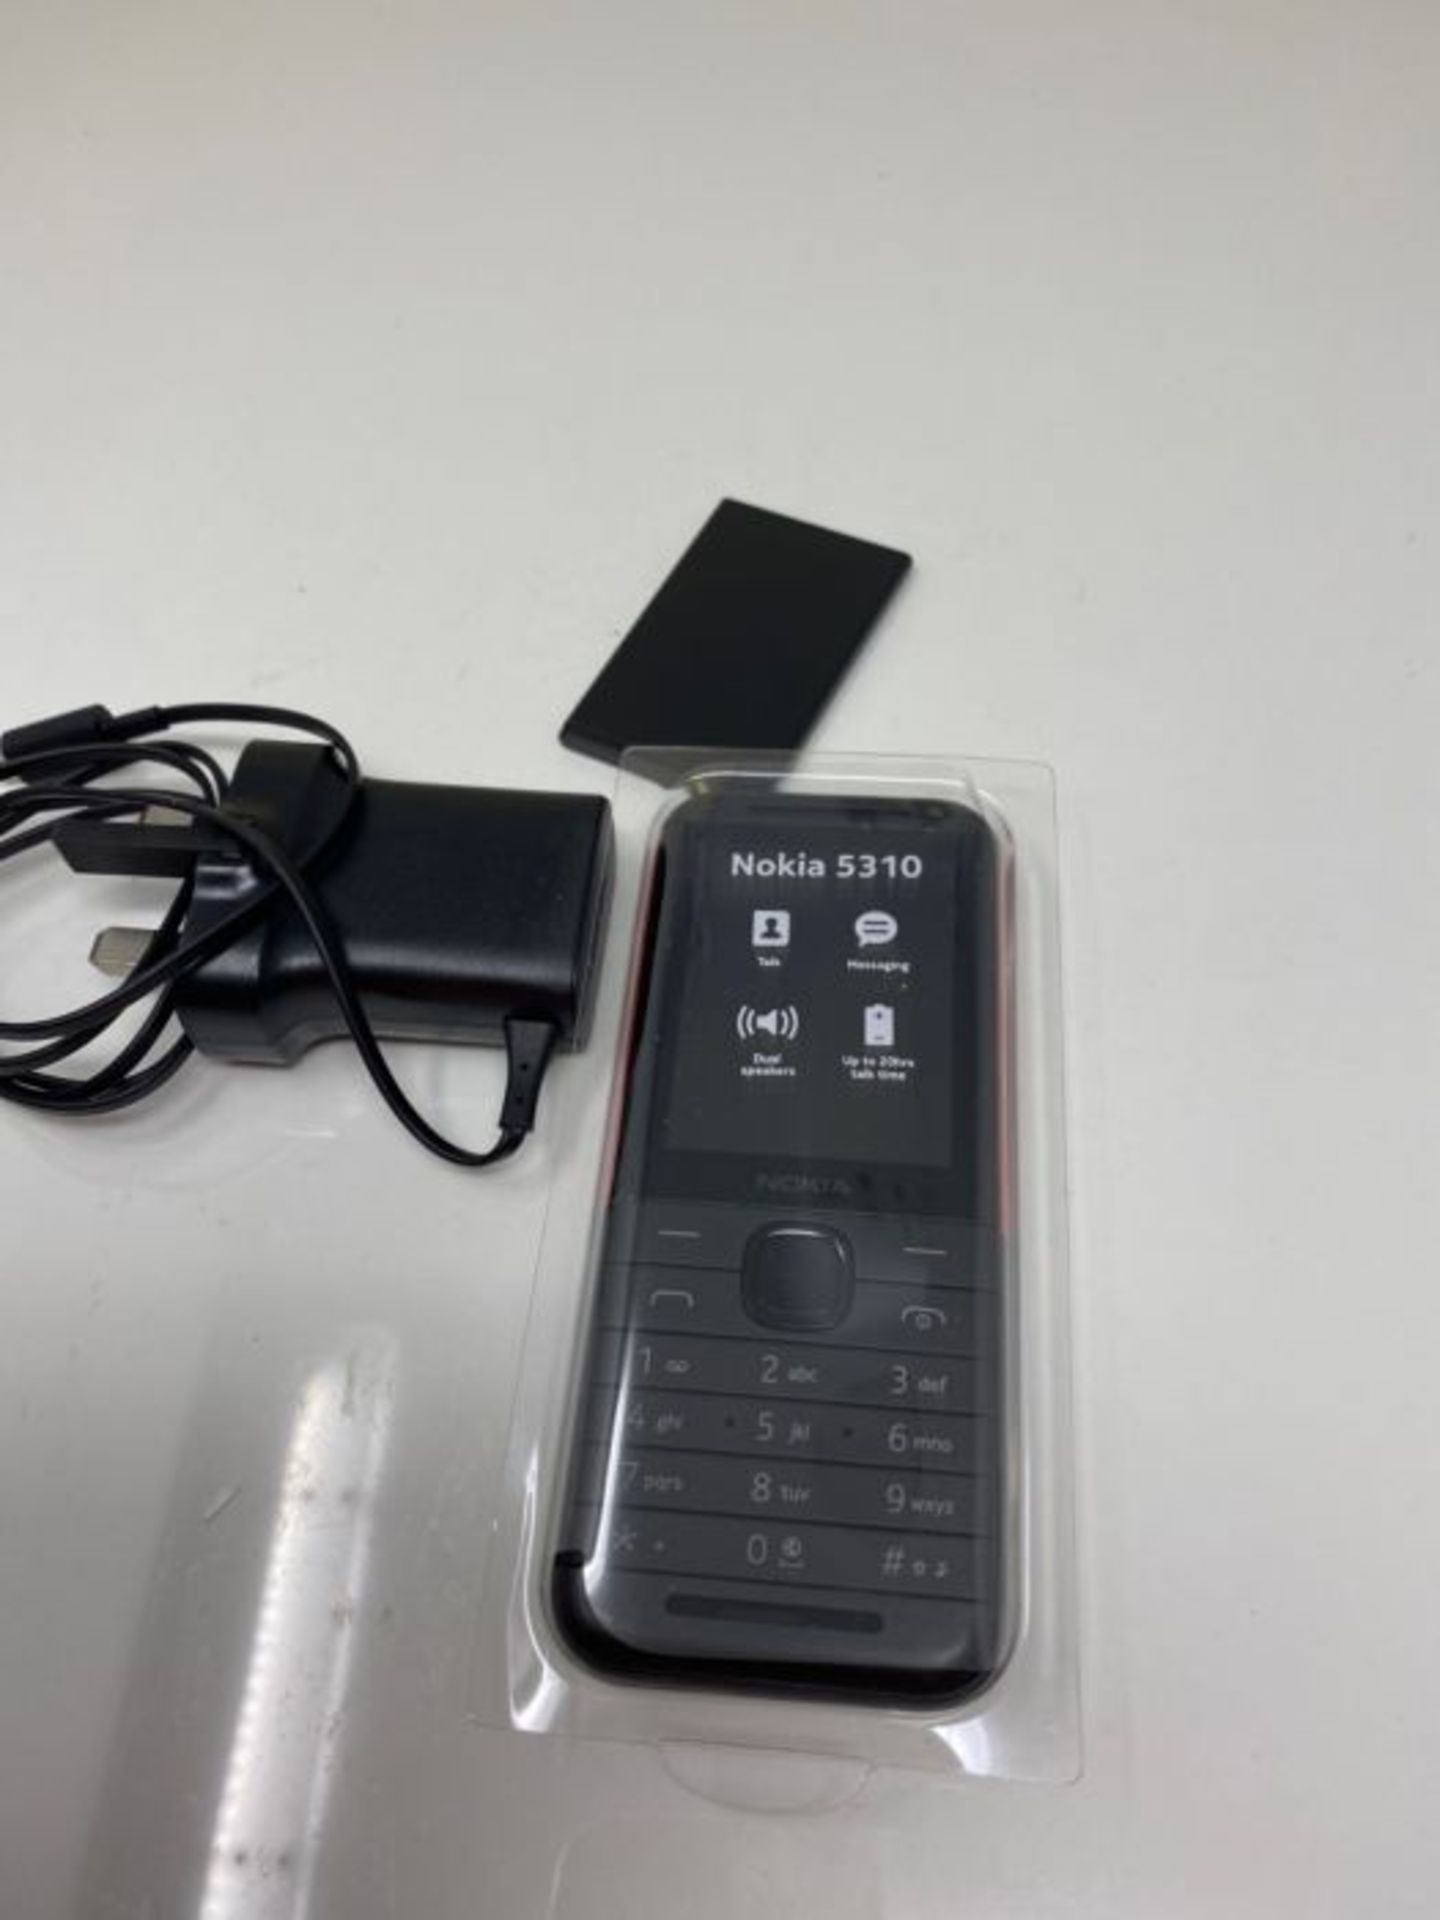 Nokia 5310 2.4 Inch 8 MB UK SIM-Free 2G Feature Phone (Dual Sim) - Black/Red - Image 3 of 3